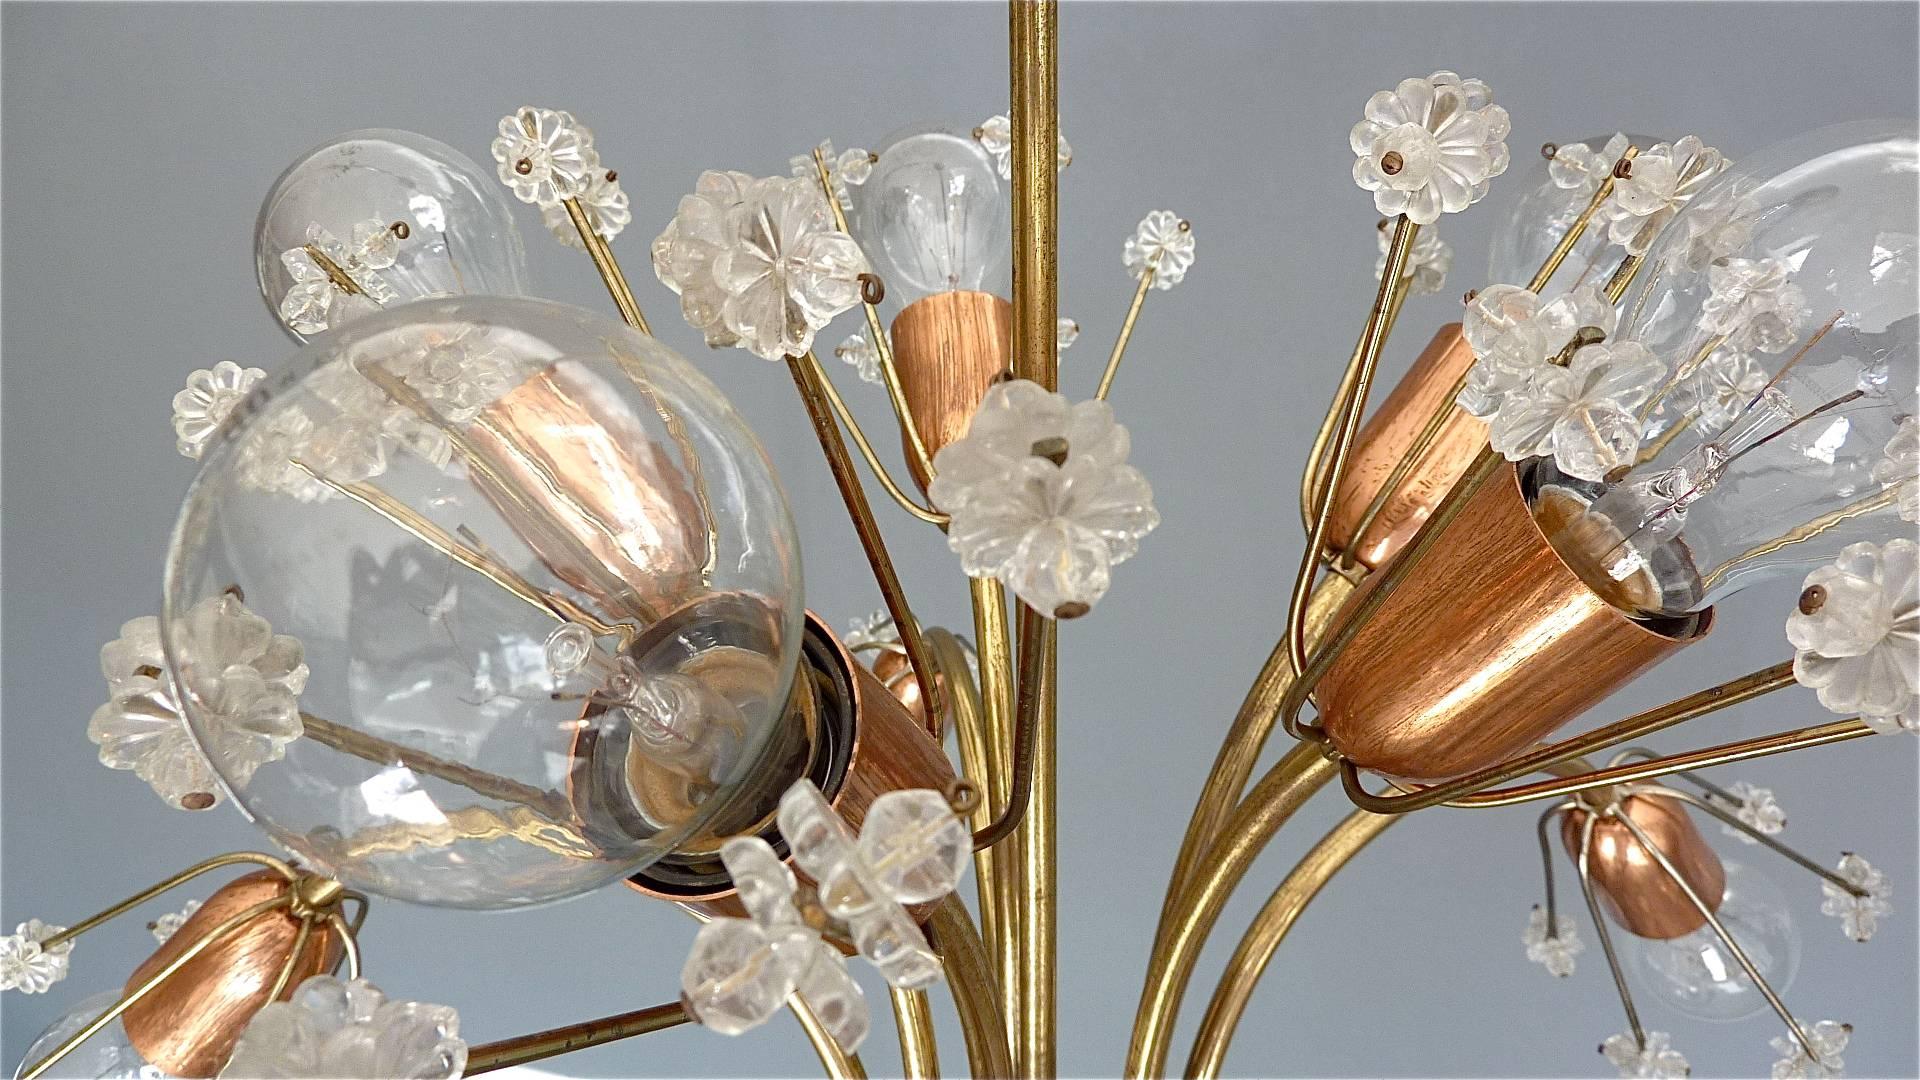 Austrian Emil Stejnar Sputnik Chandelier Rupert Nikoll, Brass Copper Glass, Vienna, 1950s For Sale